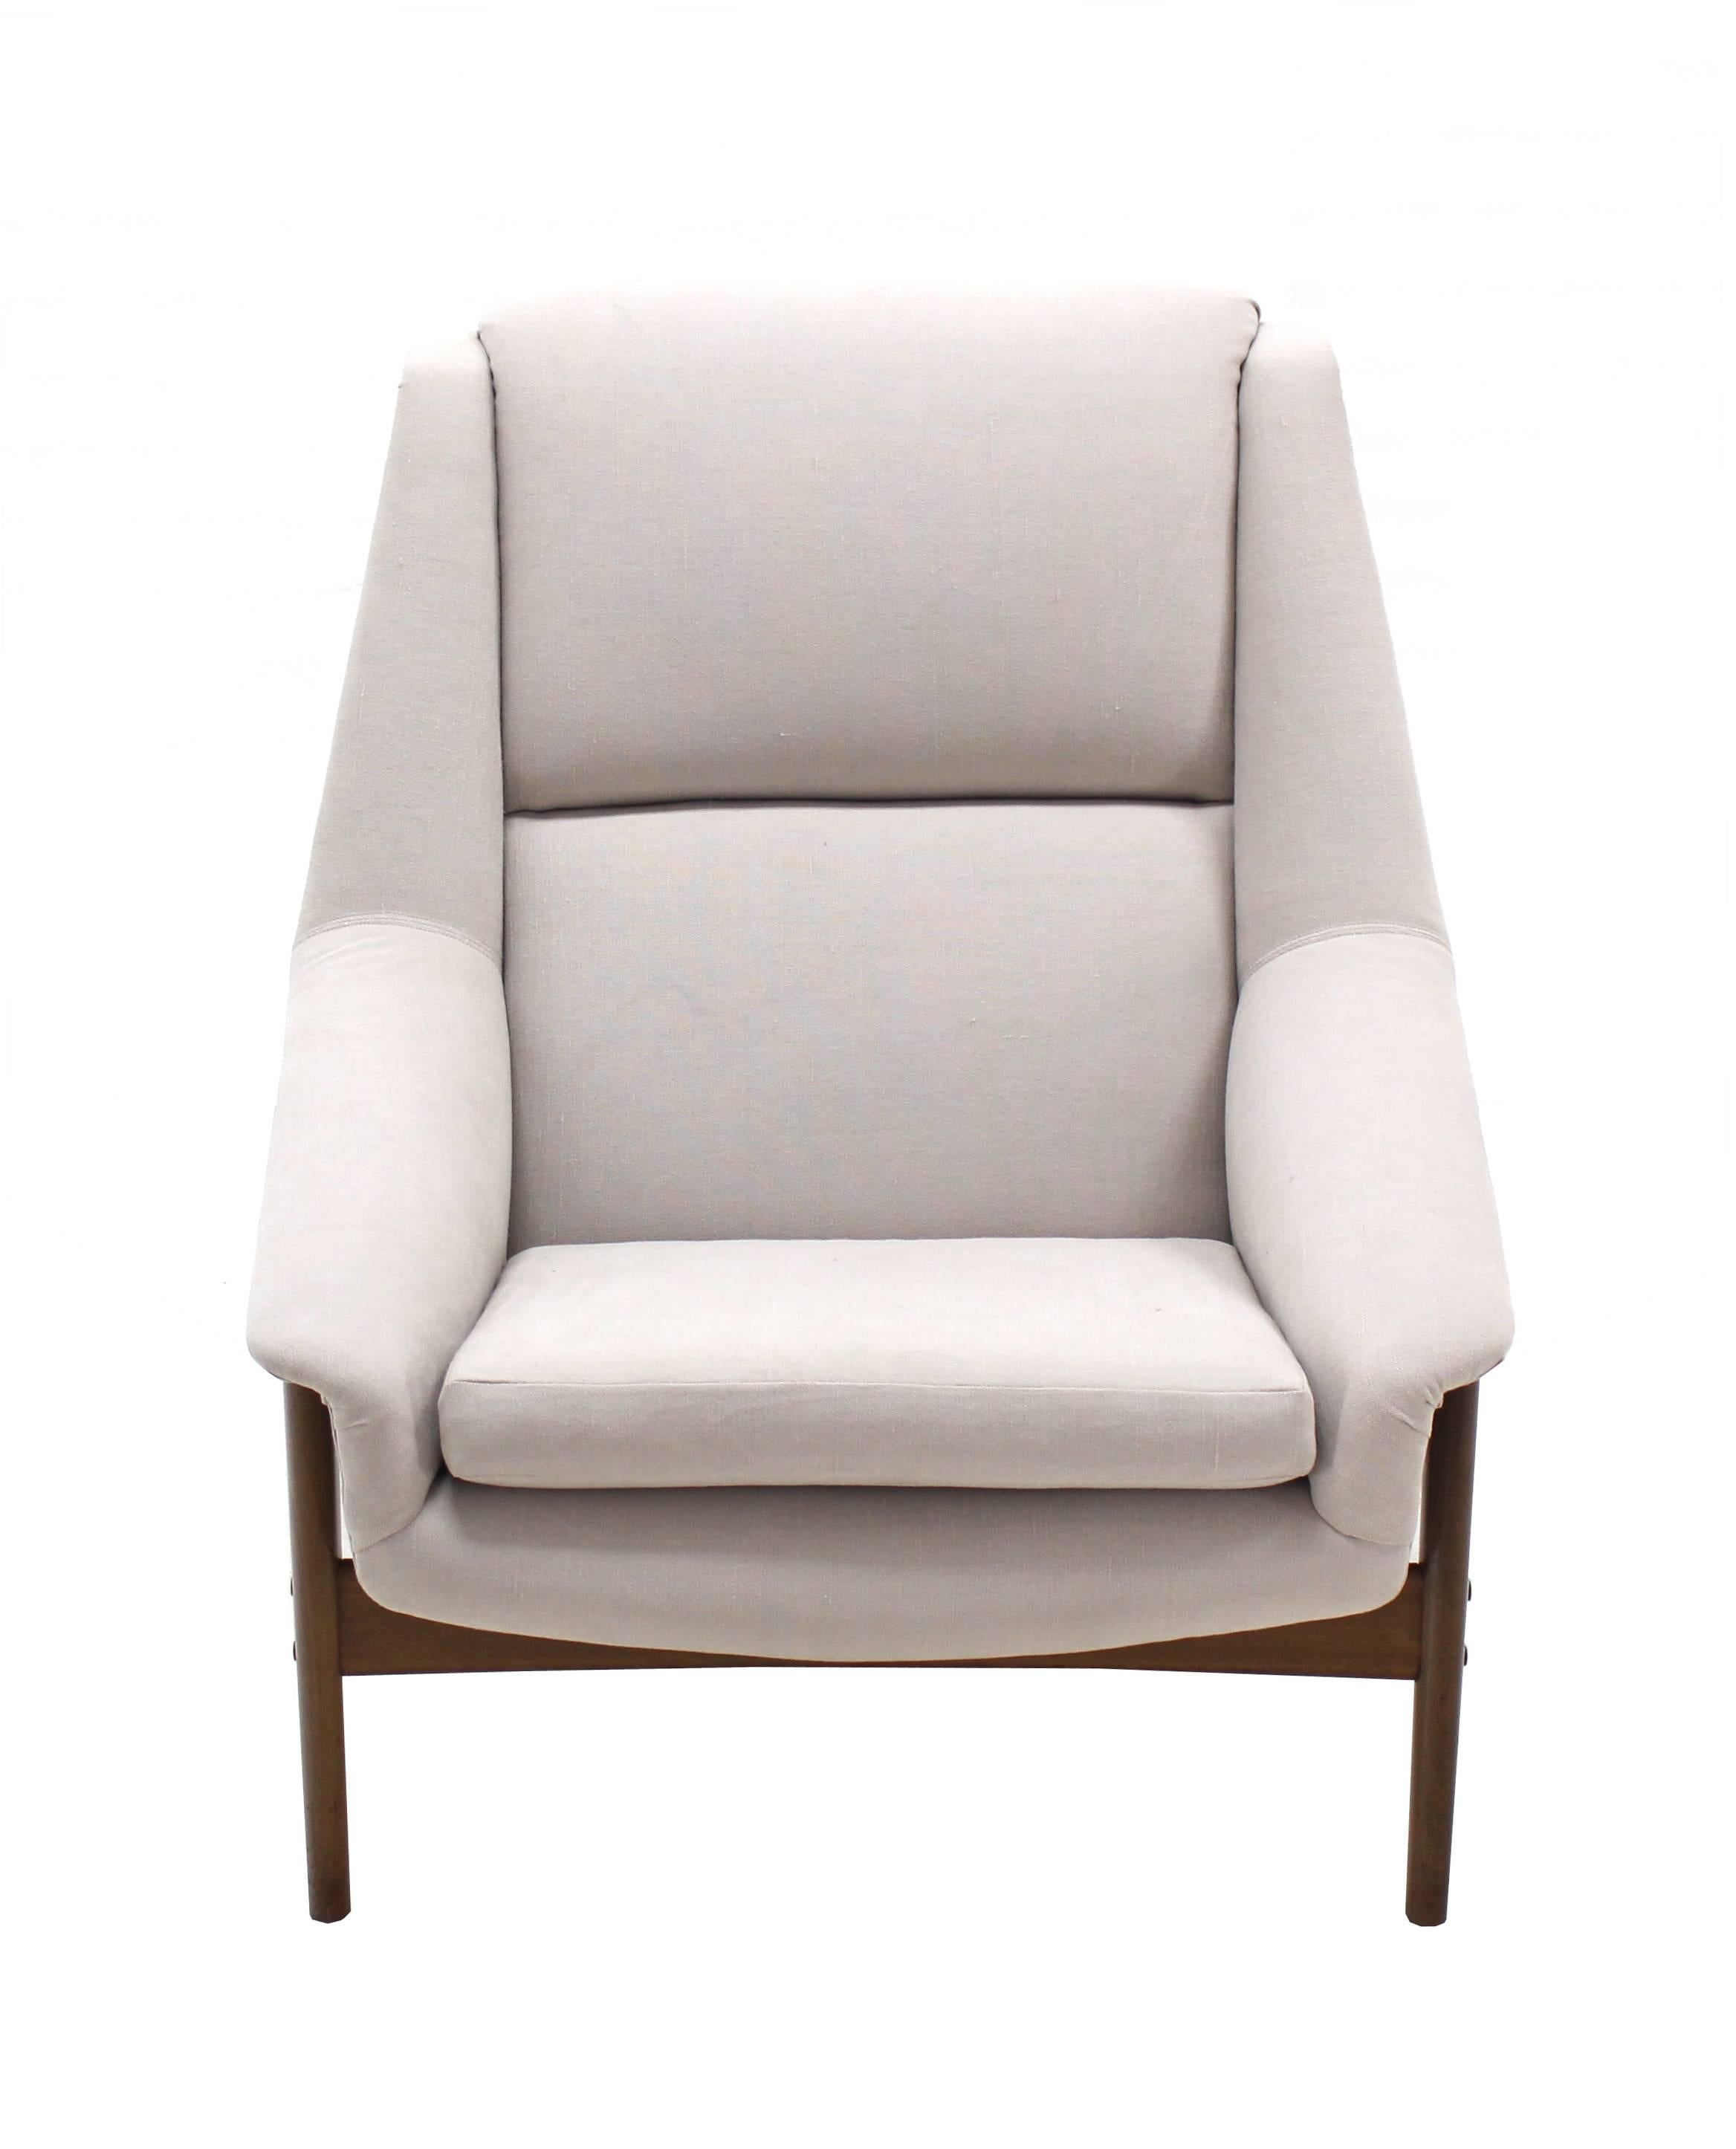 Very nice Danish Mid-Century Modern new upholstery lounge chair.
   